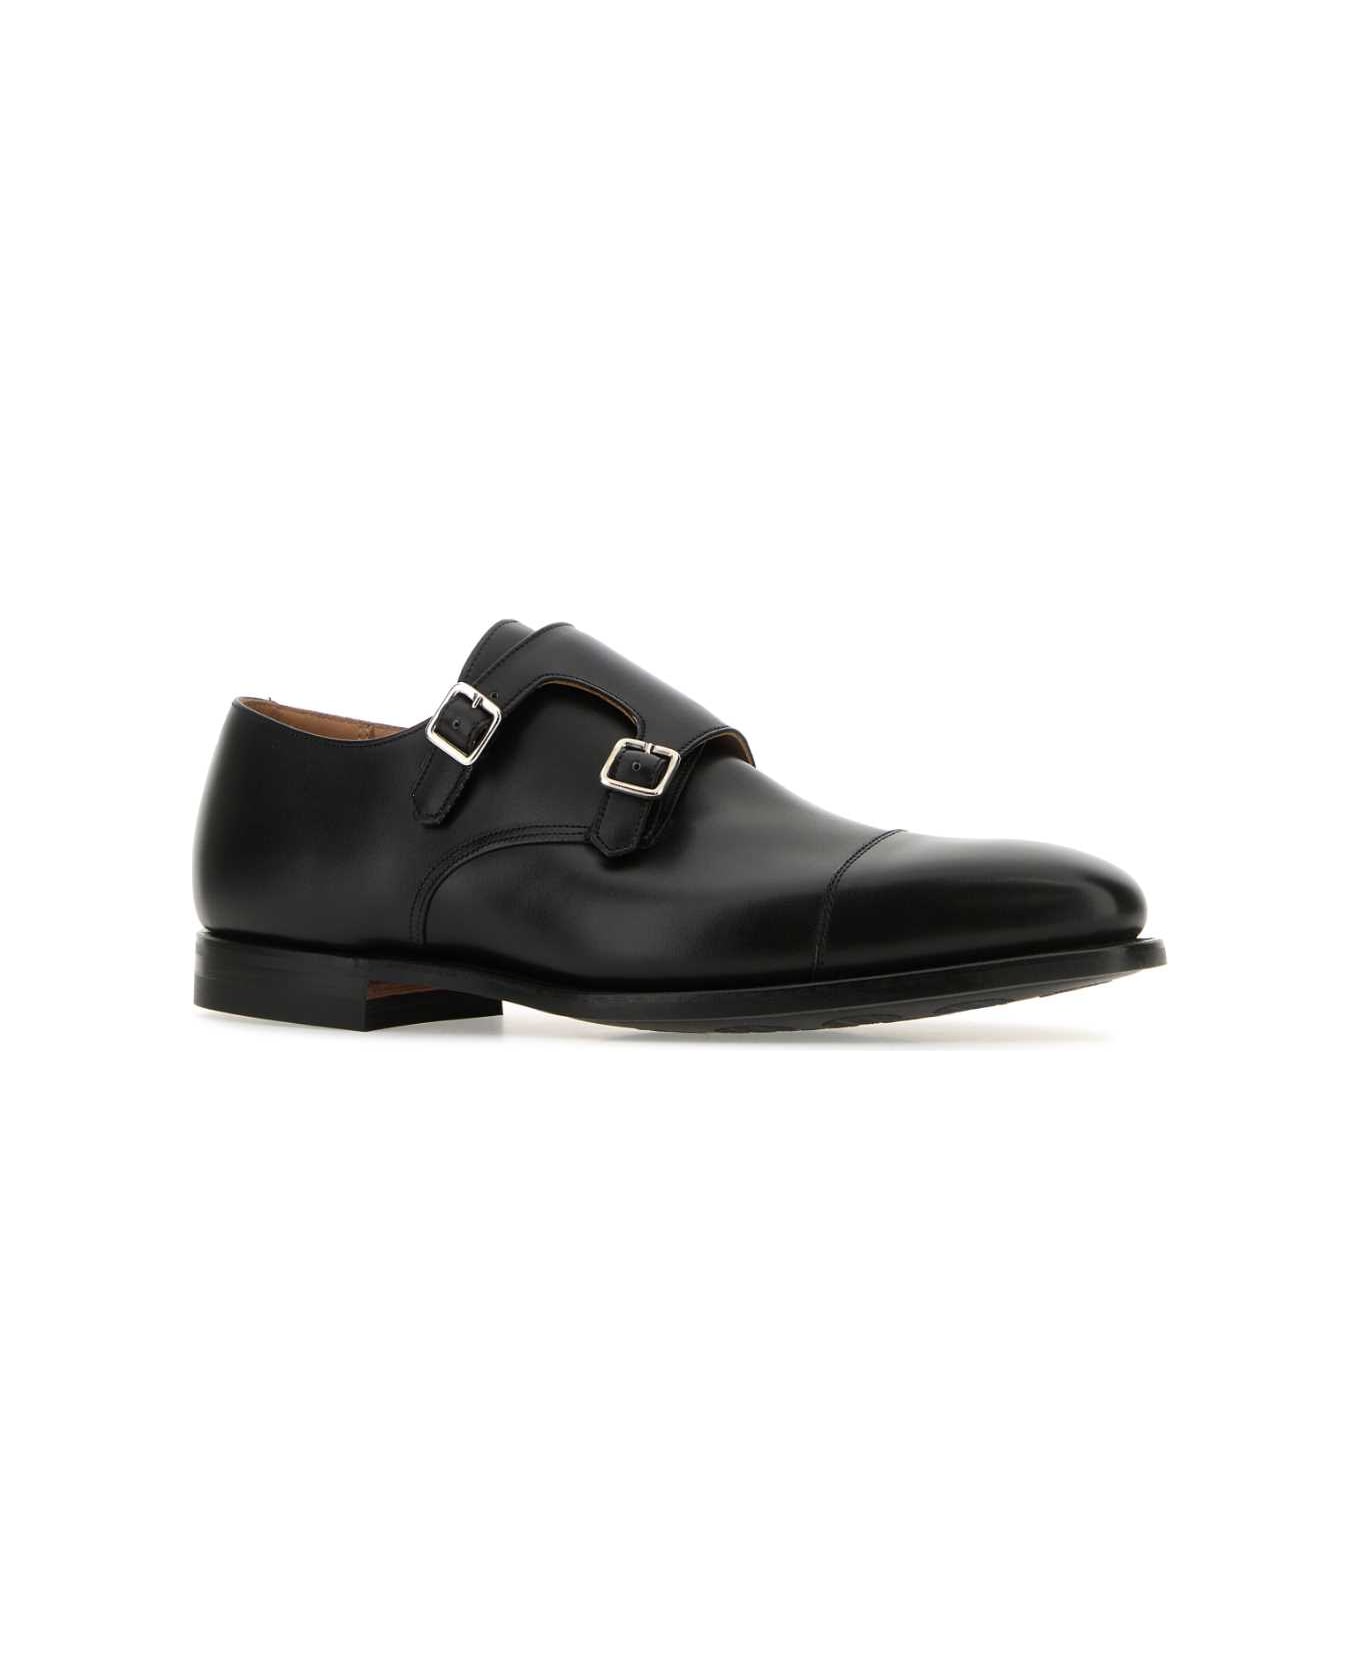 Crockett & Jones Black Leather Lowndes Monk Strap Shoes - BLACKCALF